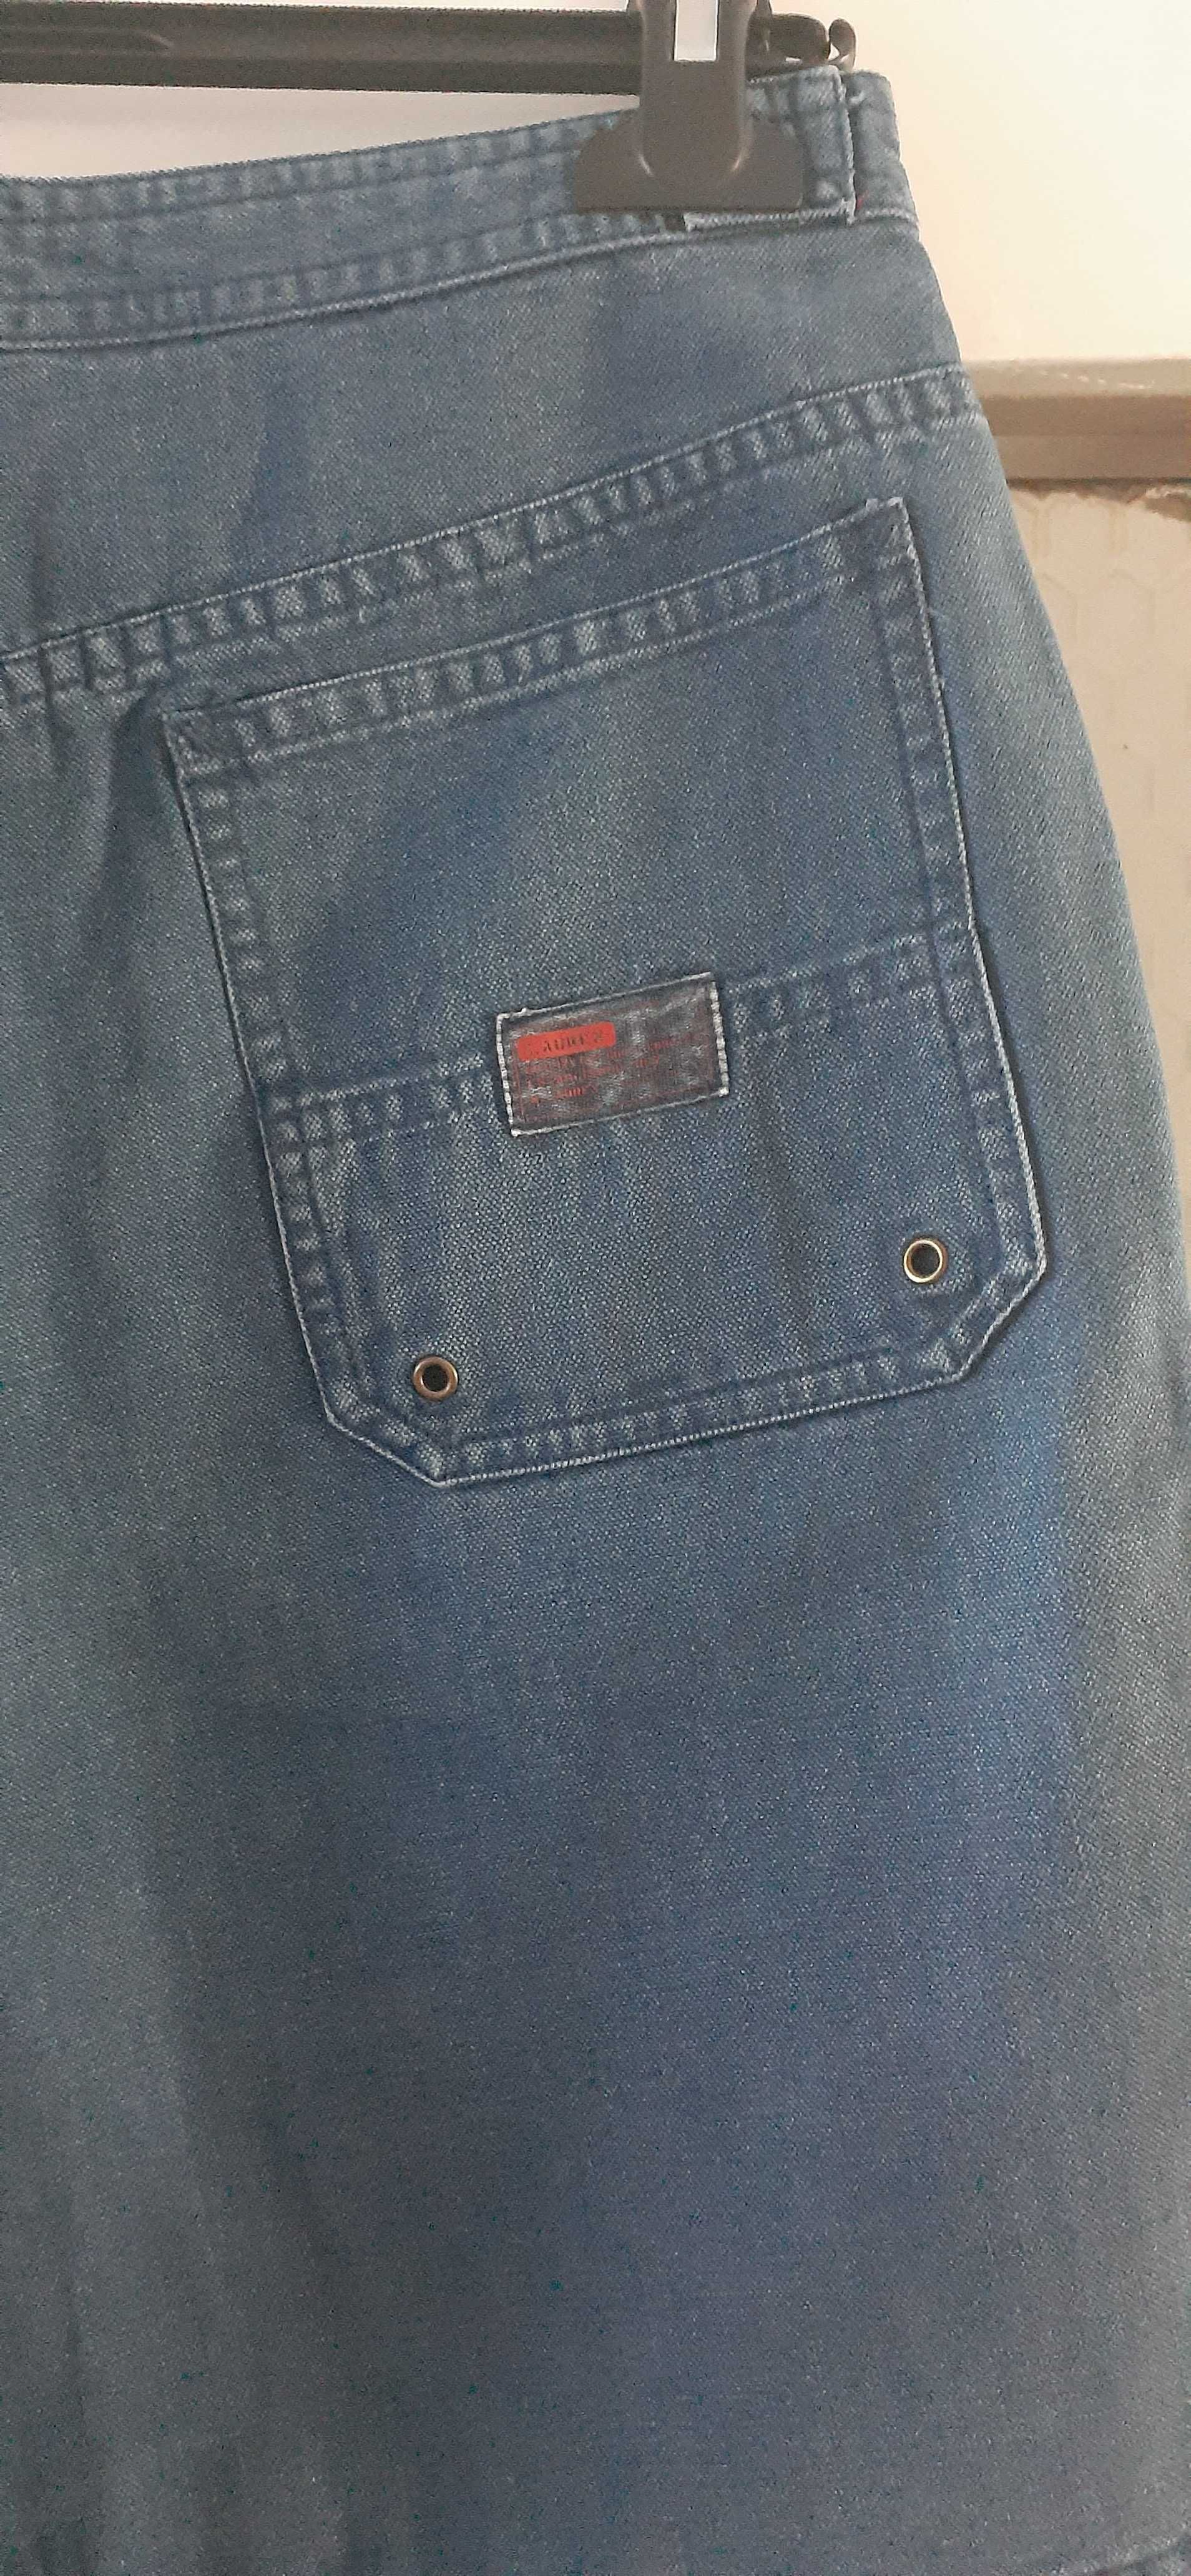 Krotkie spodenki - szorty  kolor  jeans